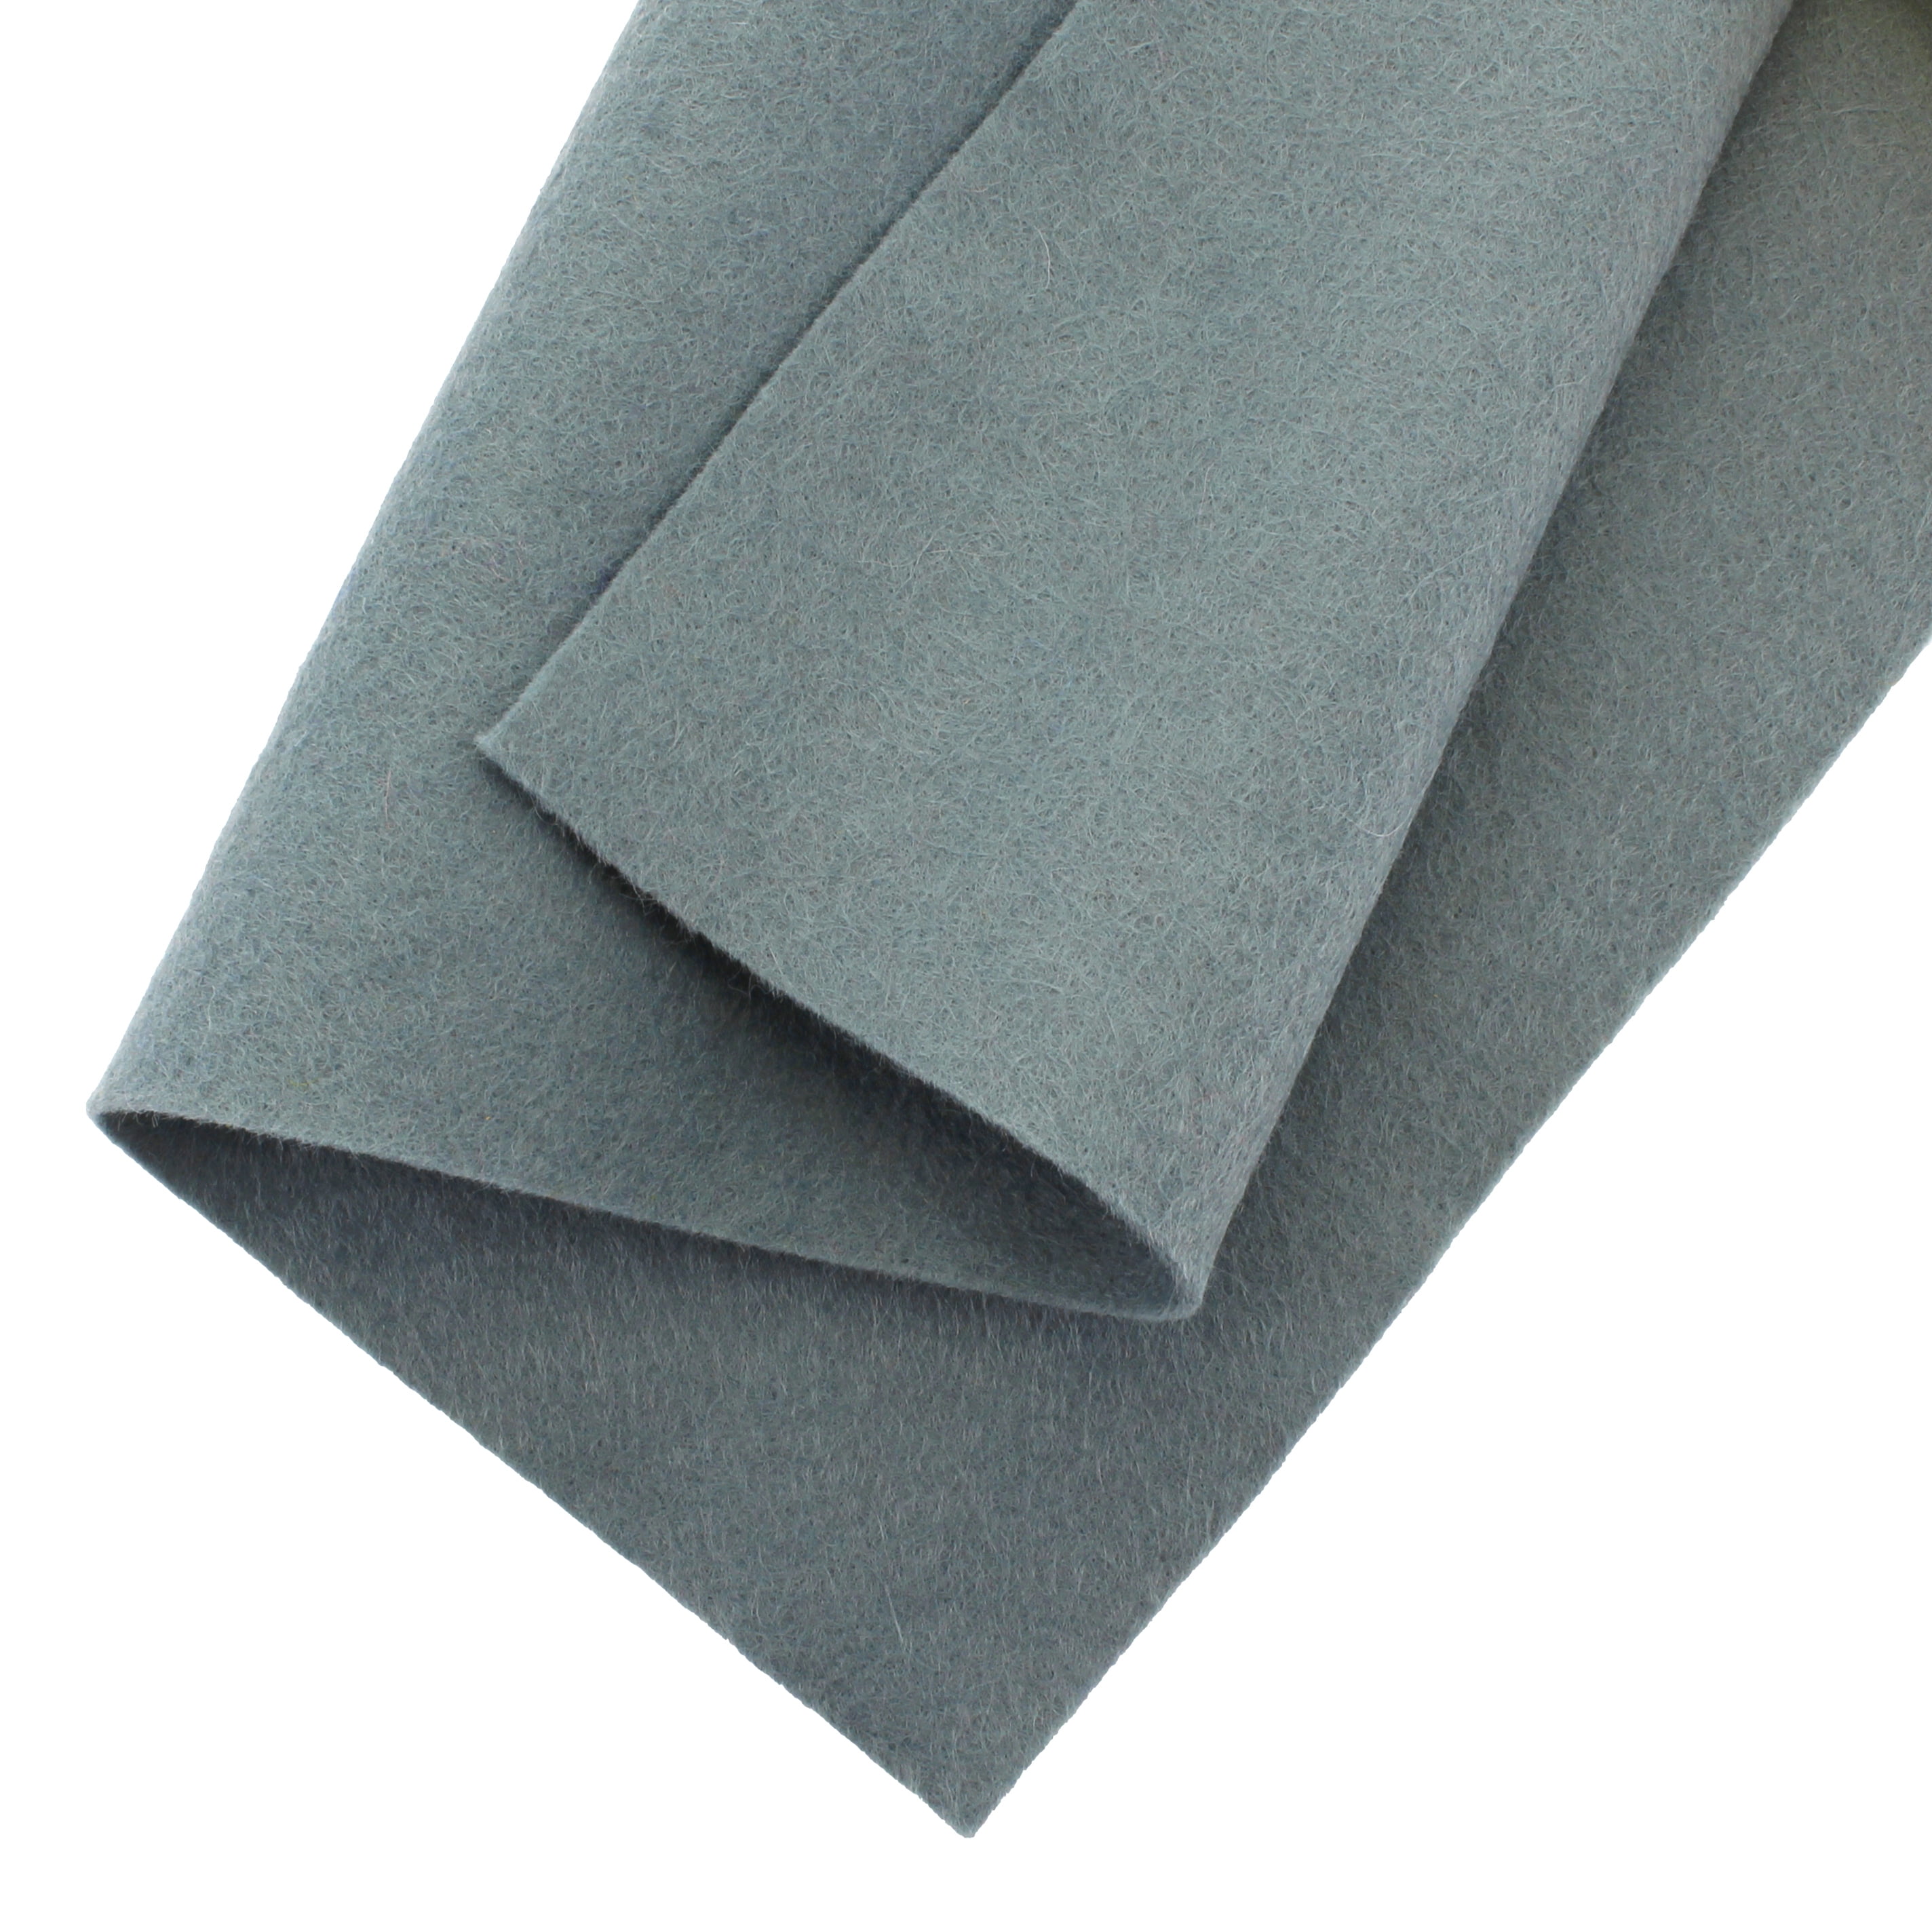 100% Merino Wool Craft Felt 18 x 18 sheet GRAY 